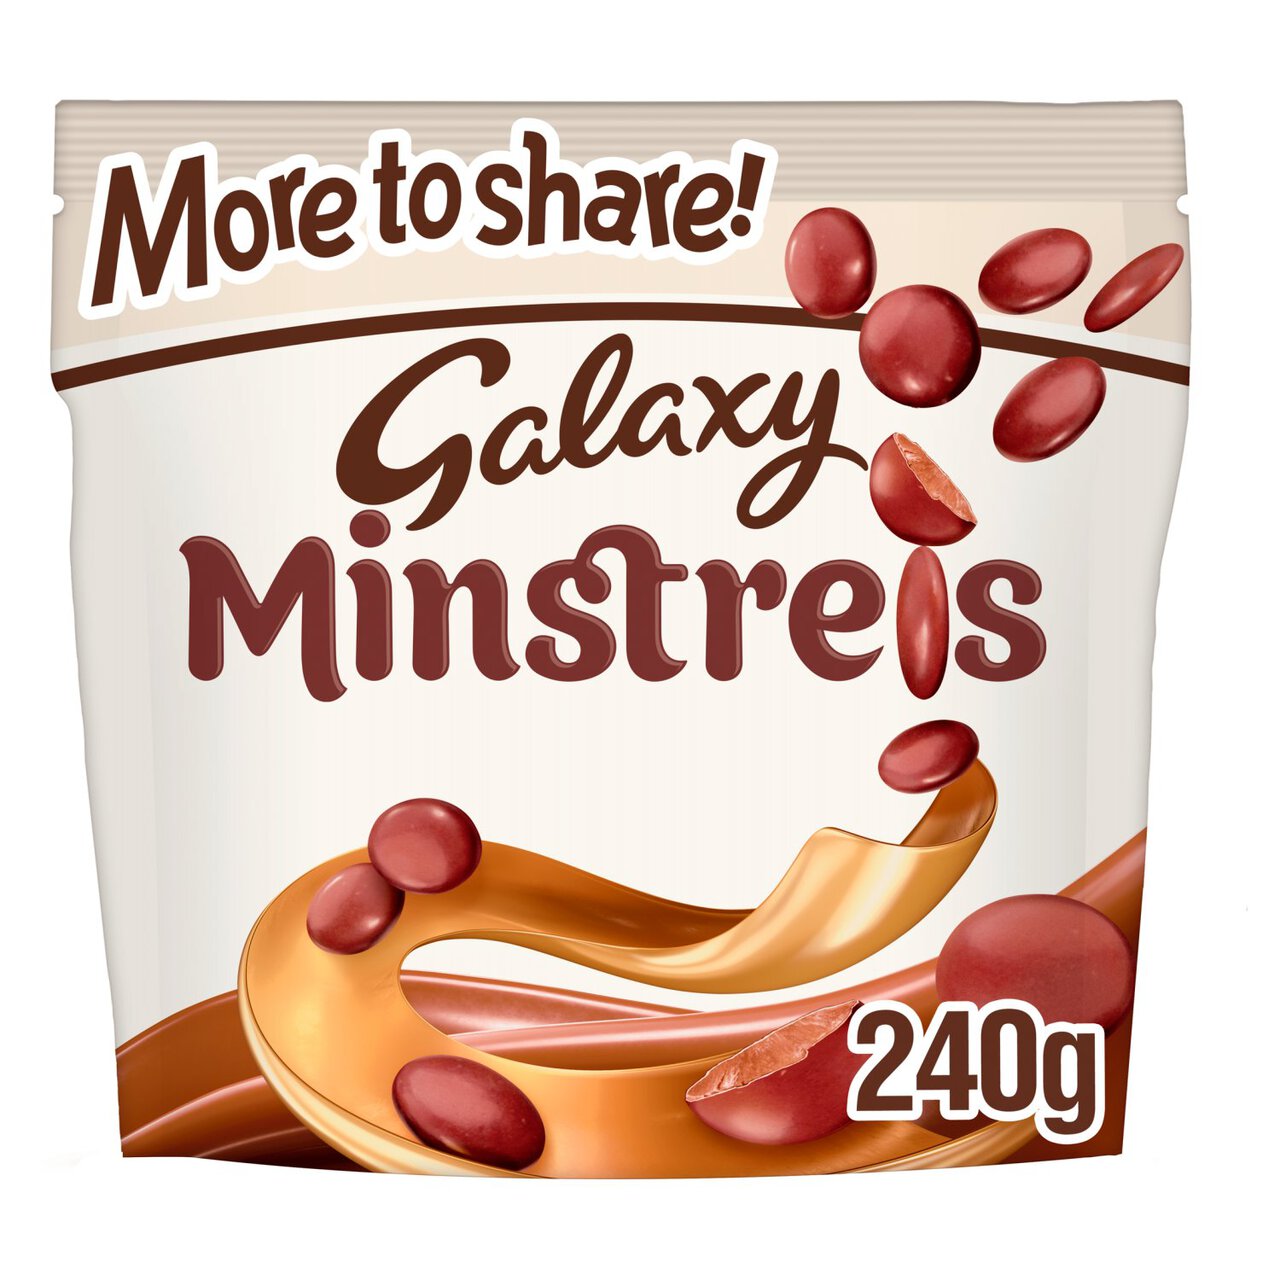 Galaxy Minstrels Milk Chocolate Buttons Large Sharing Bag 240g